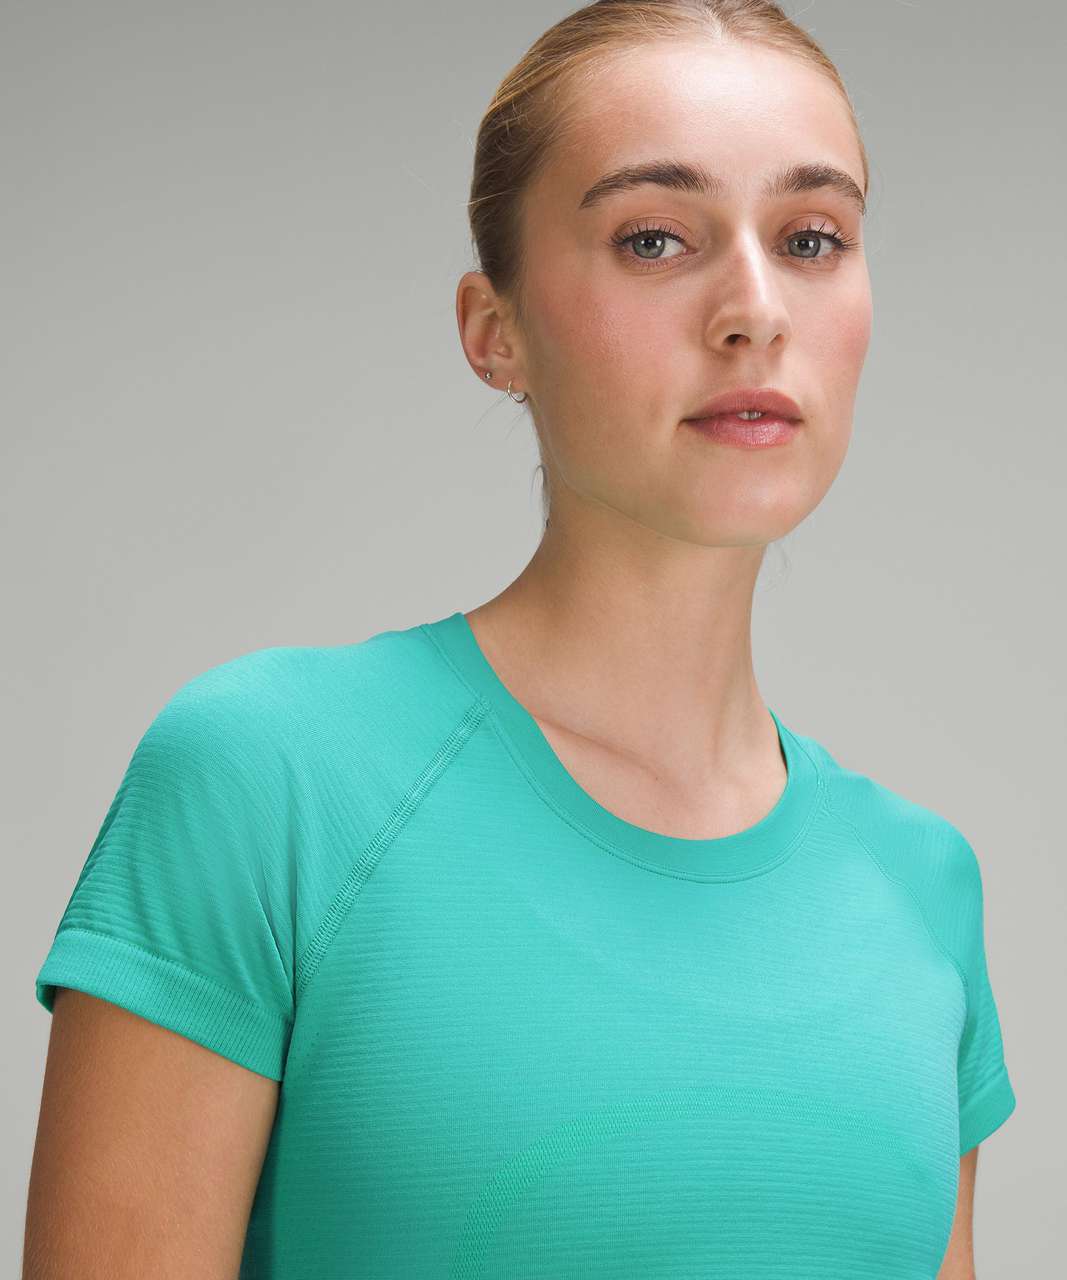 Lululemon Swiftly Tech Short-Sleeve Shirt 2.0 - Kelly Green / Kelly Green